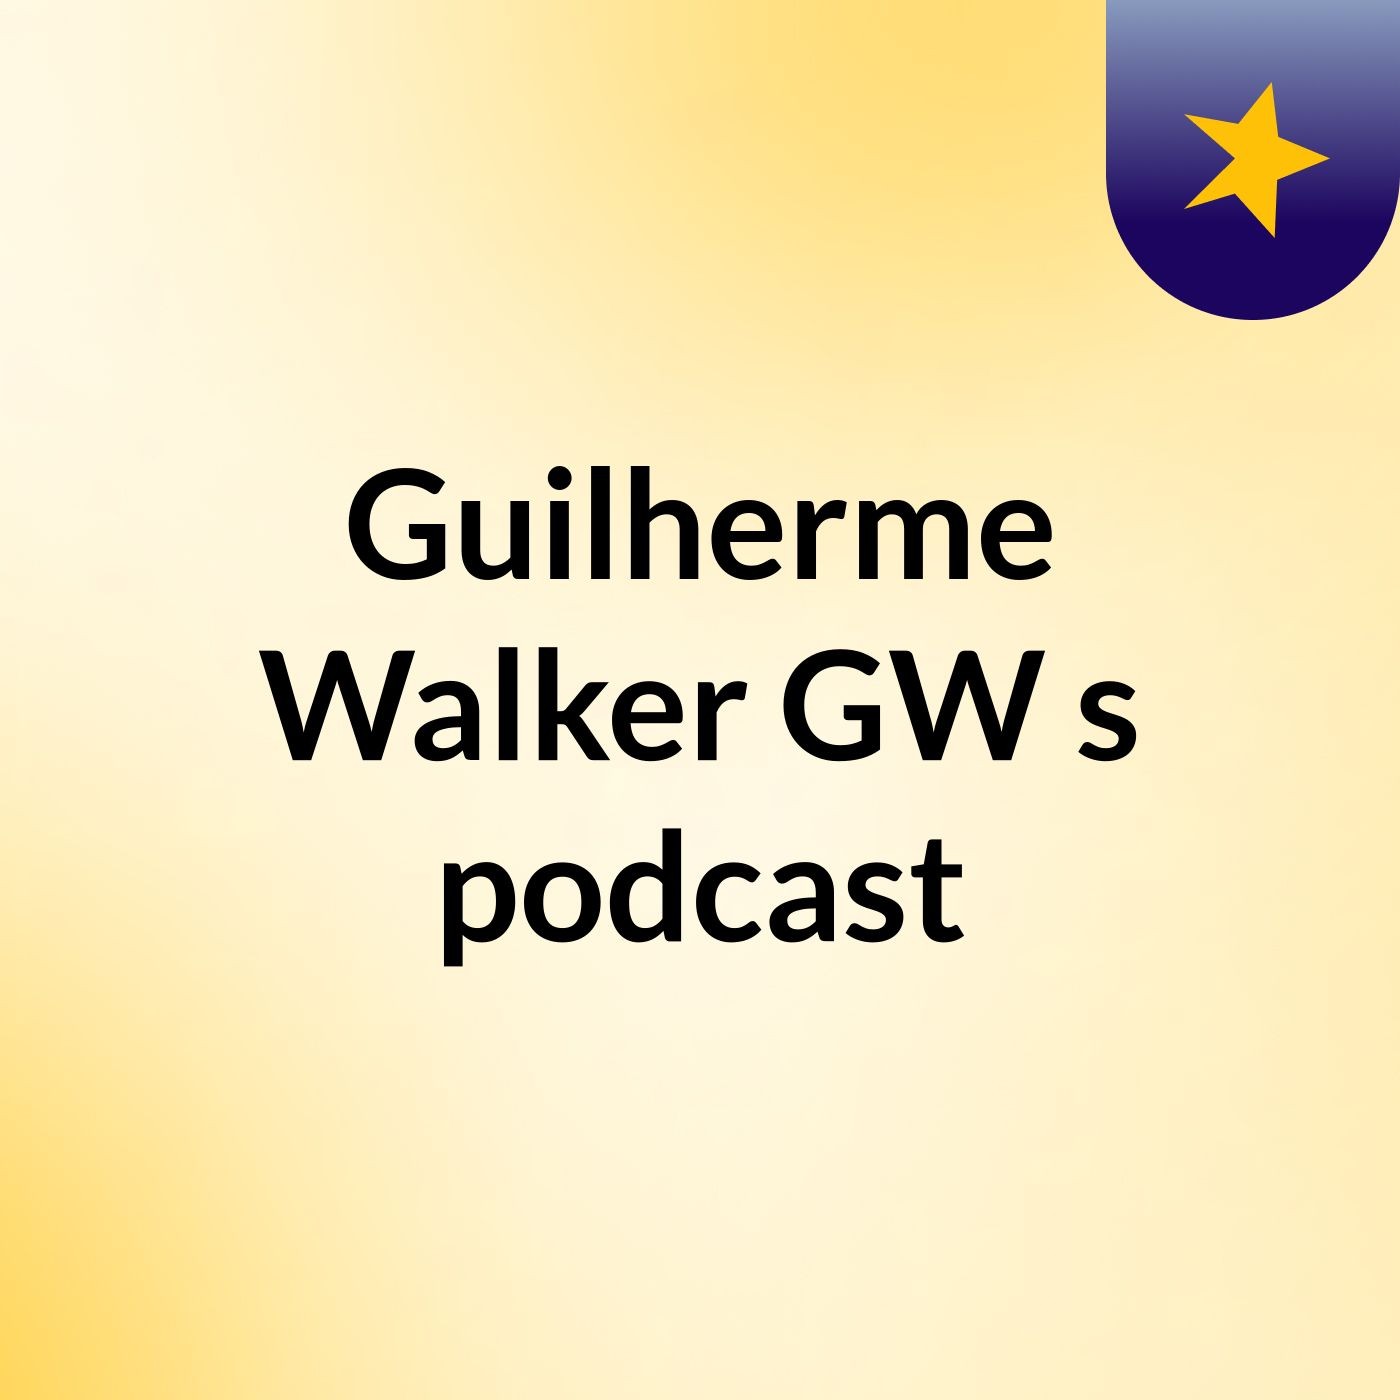 Guilherme Walker GW's podcast